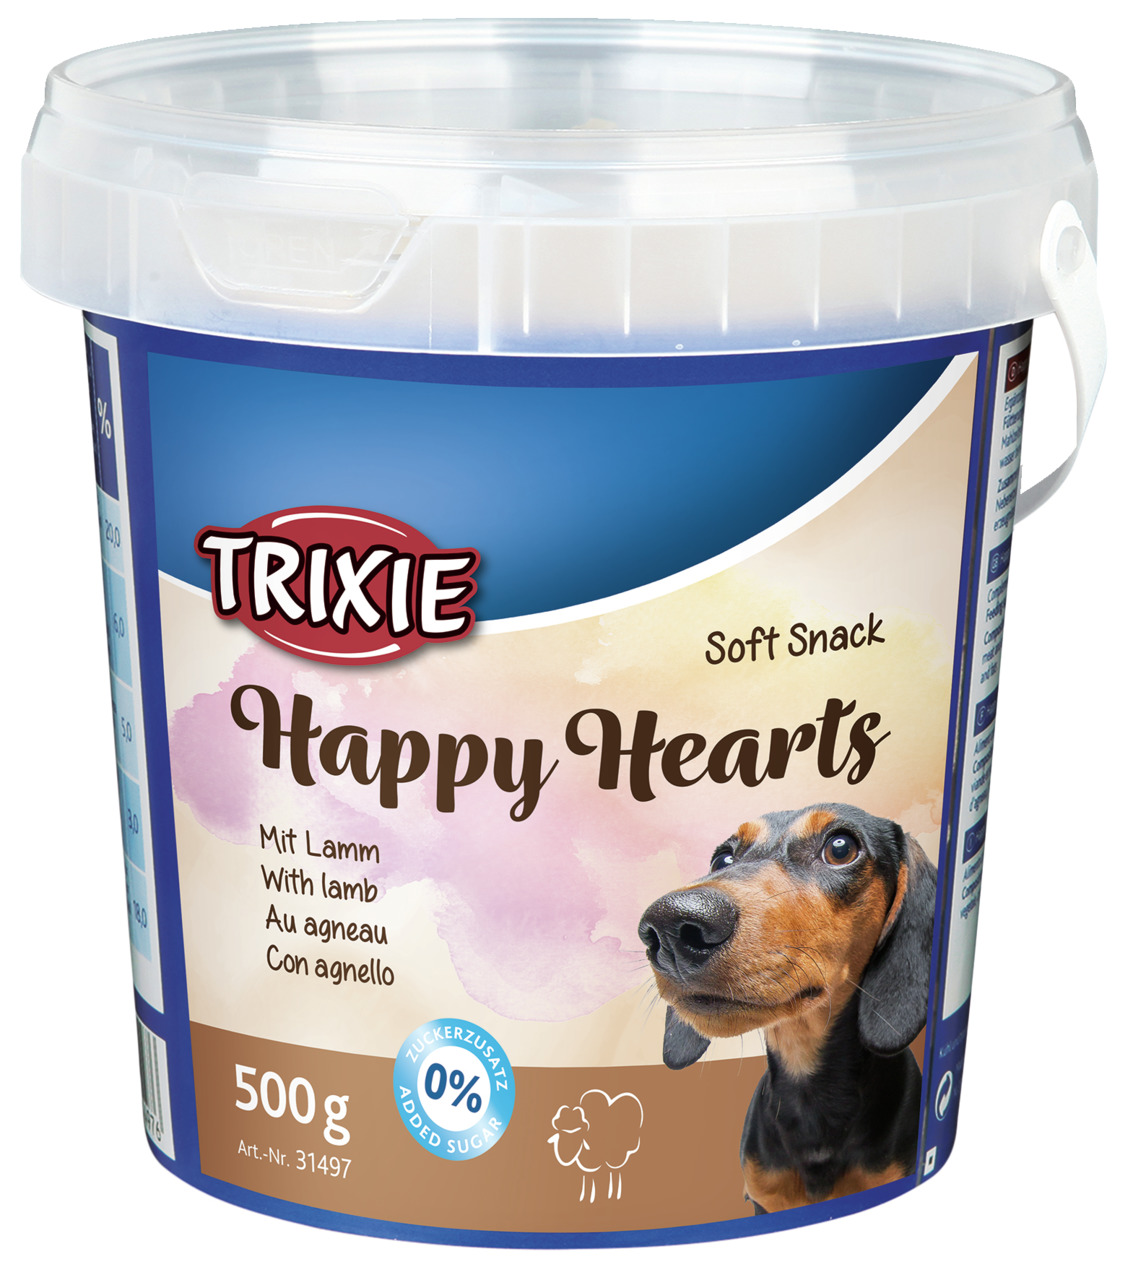 Sparpaket 2 x 500 g Trixie Soft Snack Happy Hearts mit Lamm Hunde Snack